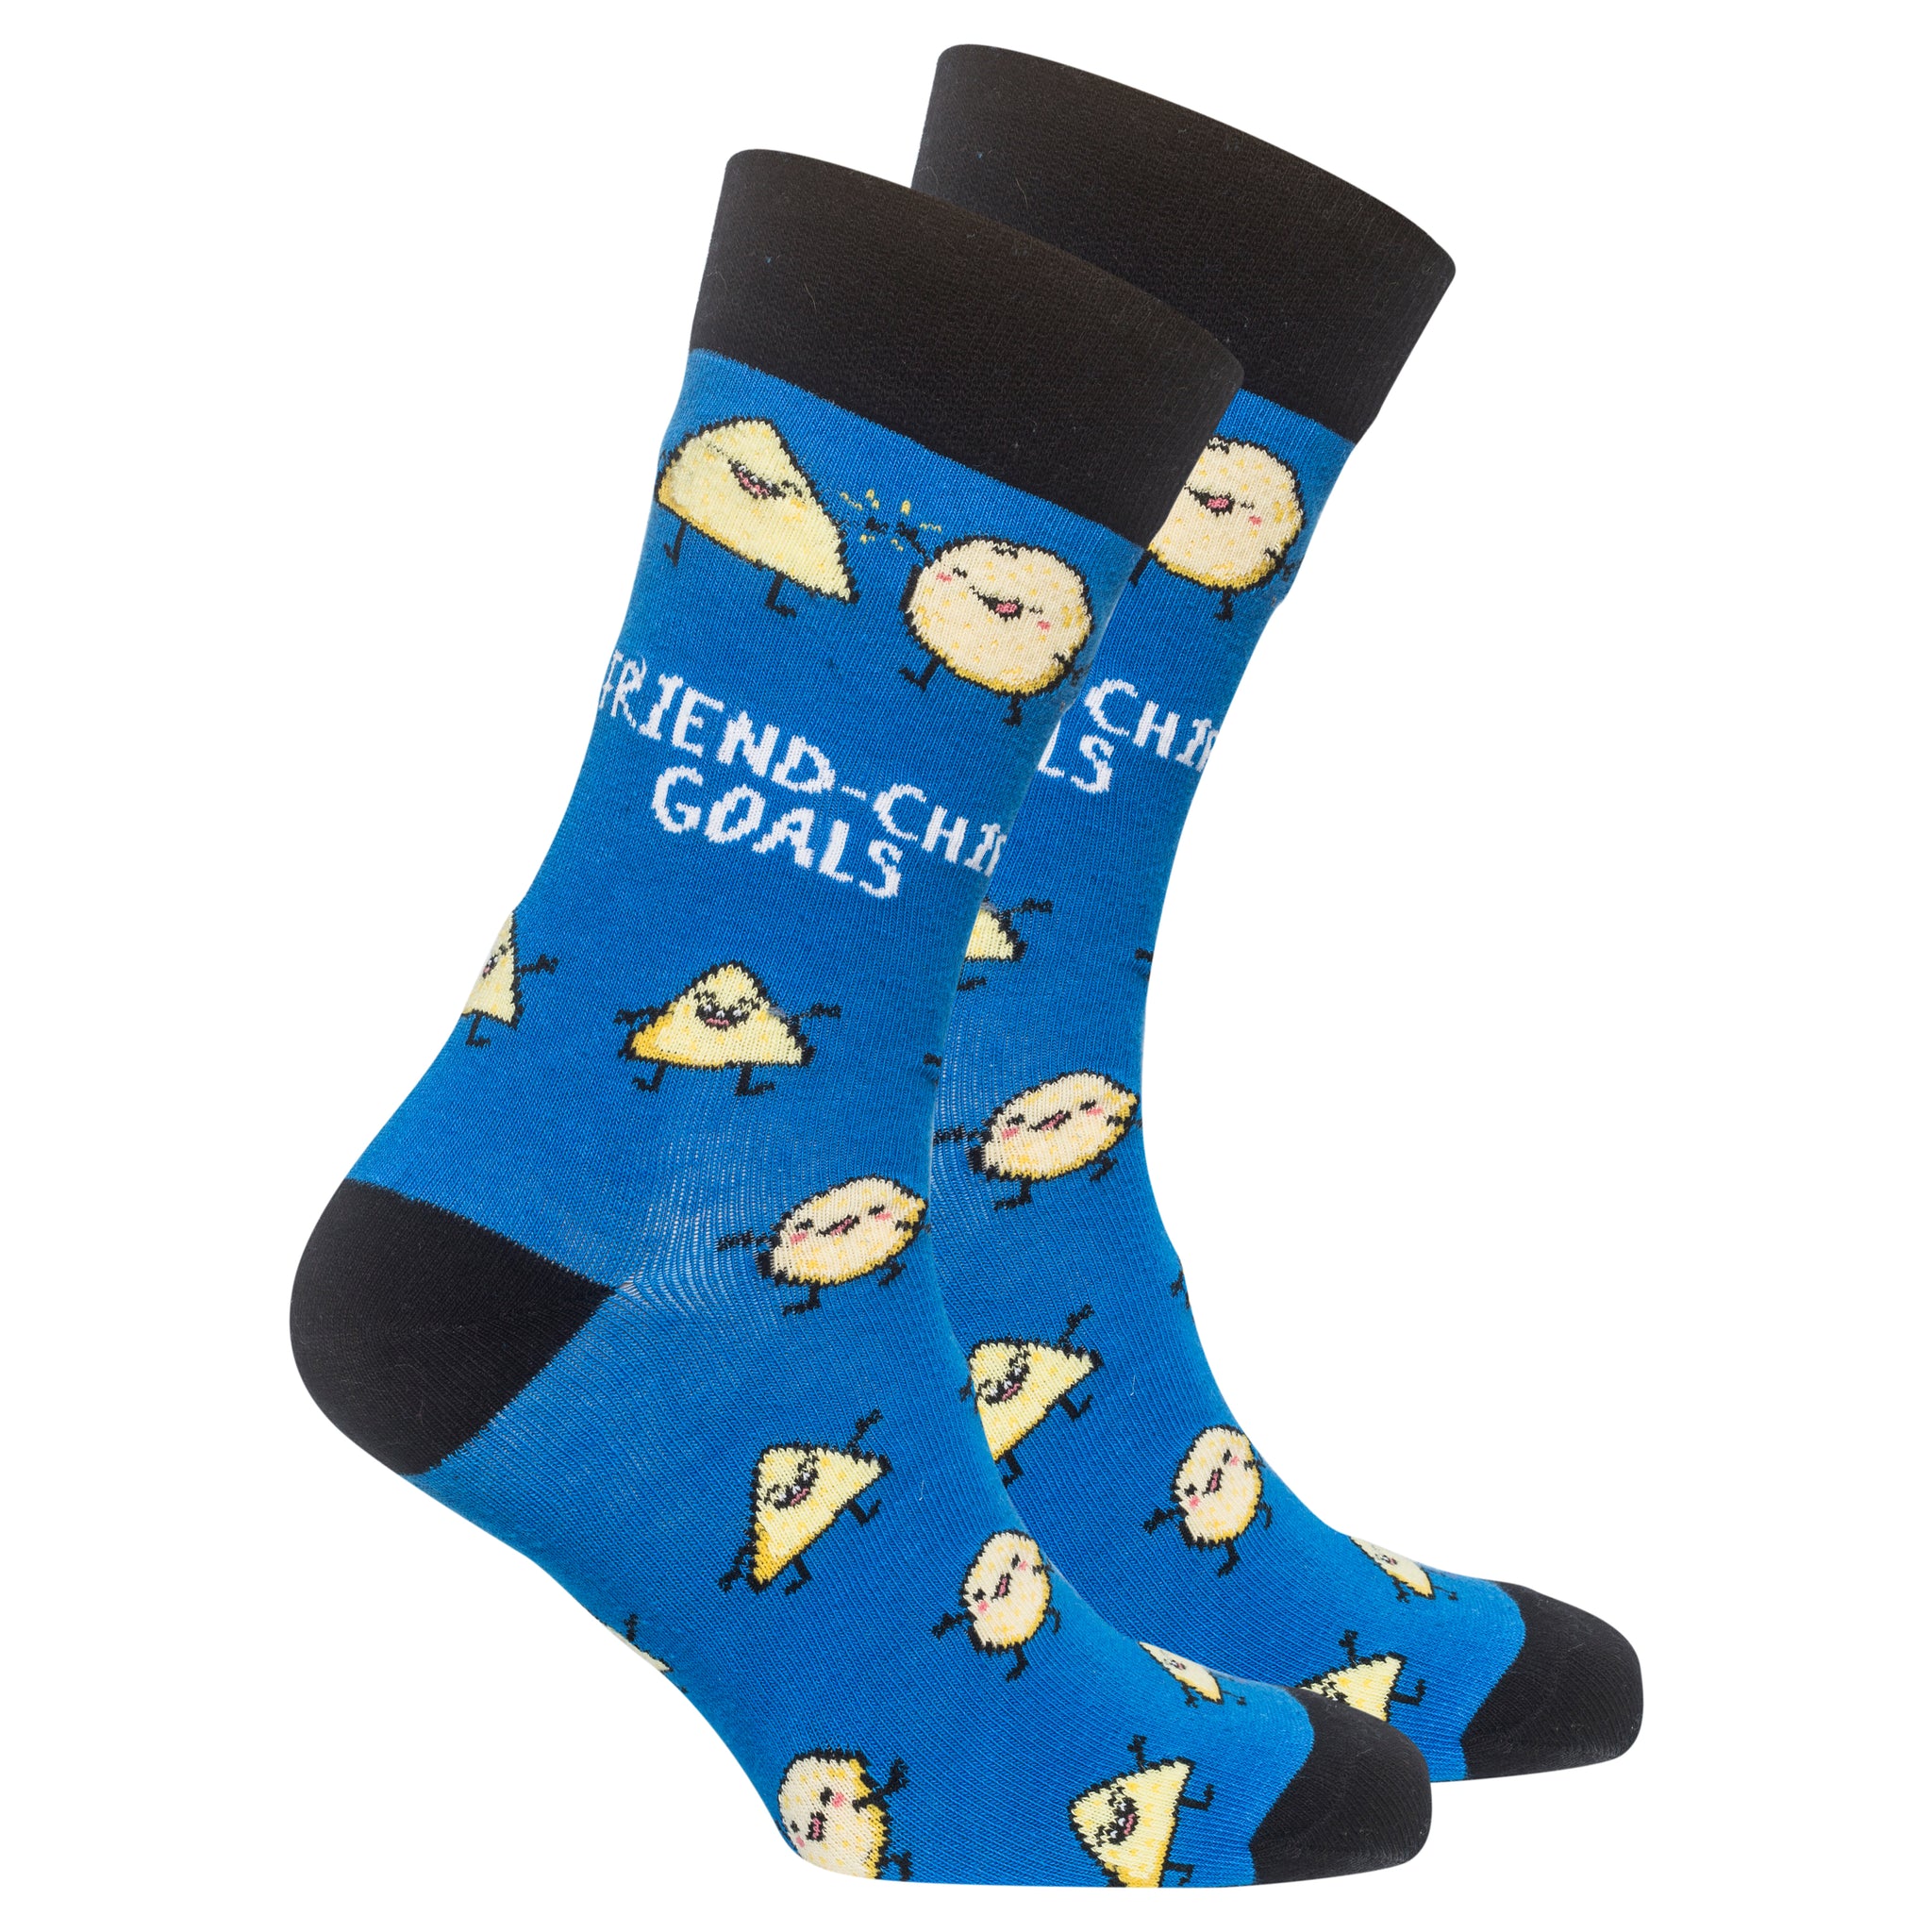 Men's Friend-Chip Socks